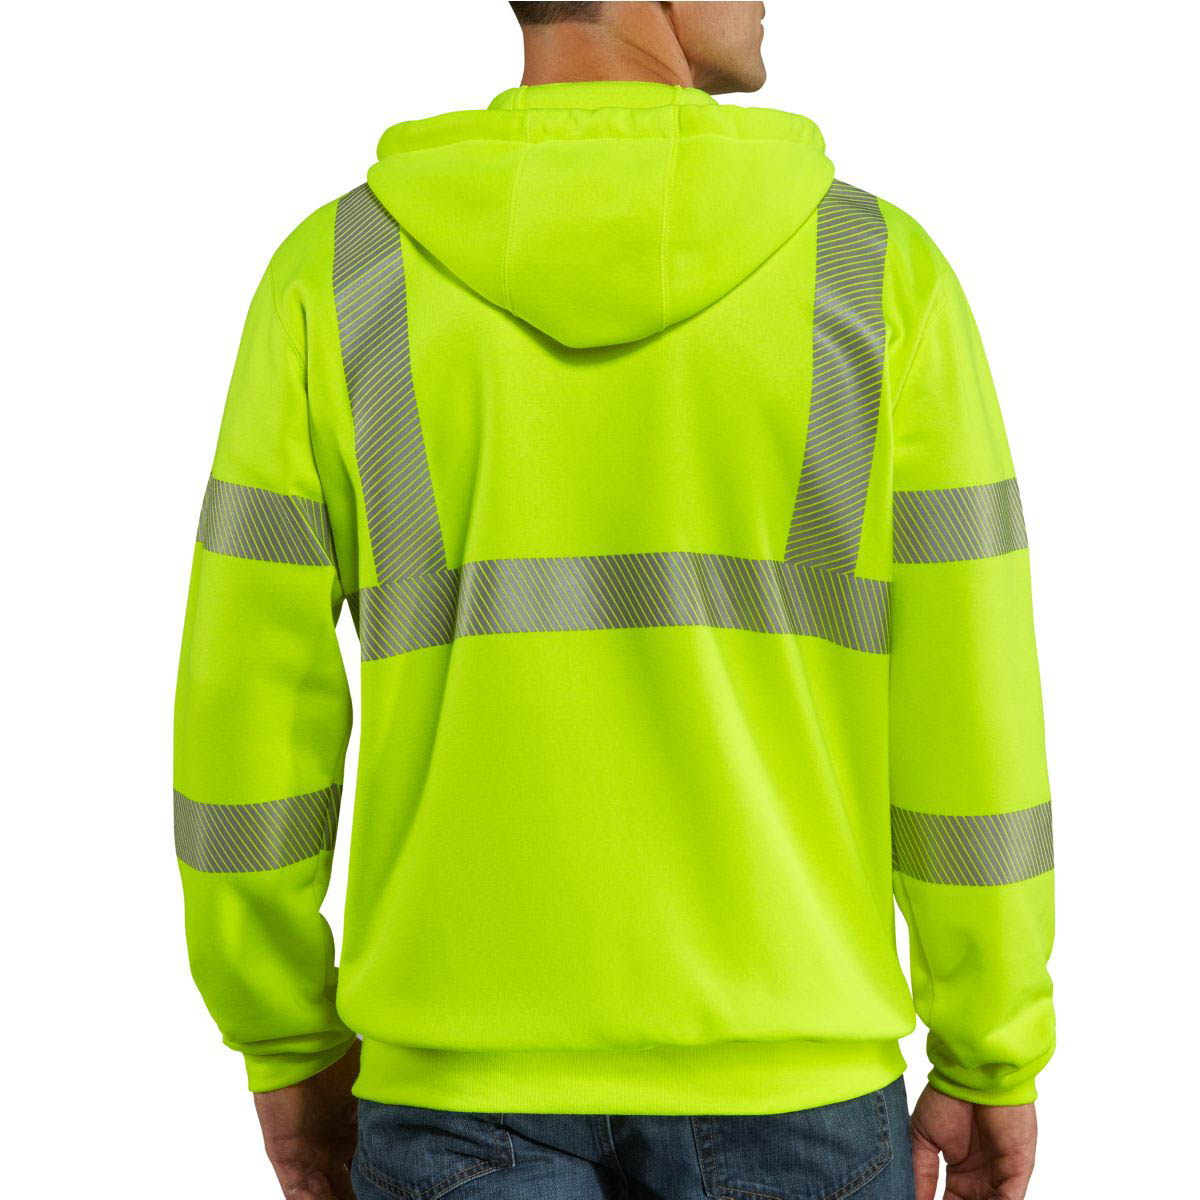 Carhartt Men's High Visibility Zip Front Class 3 Sweatshirt